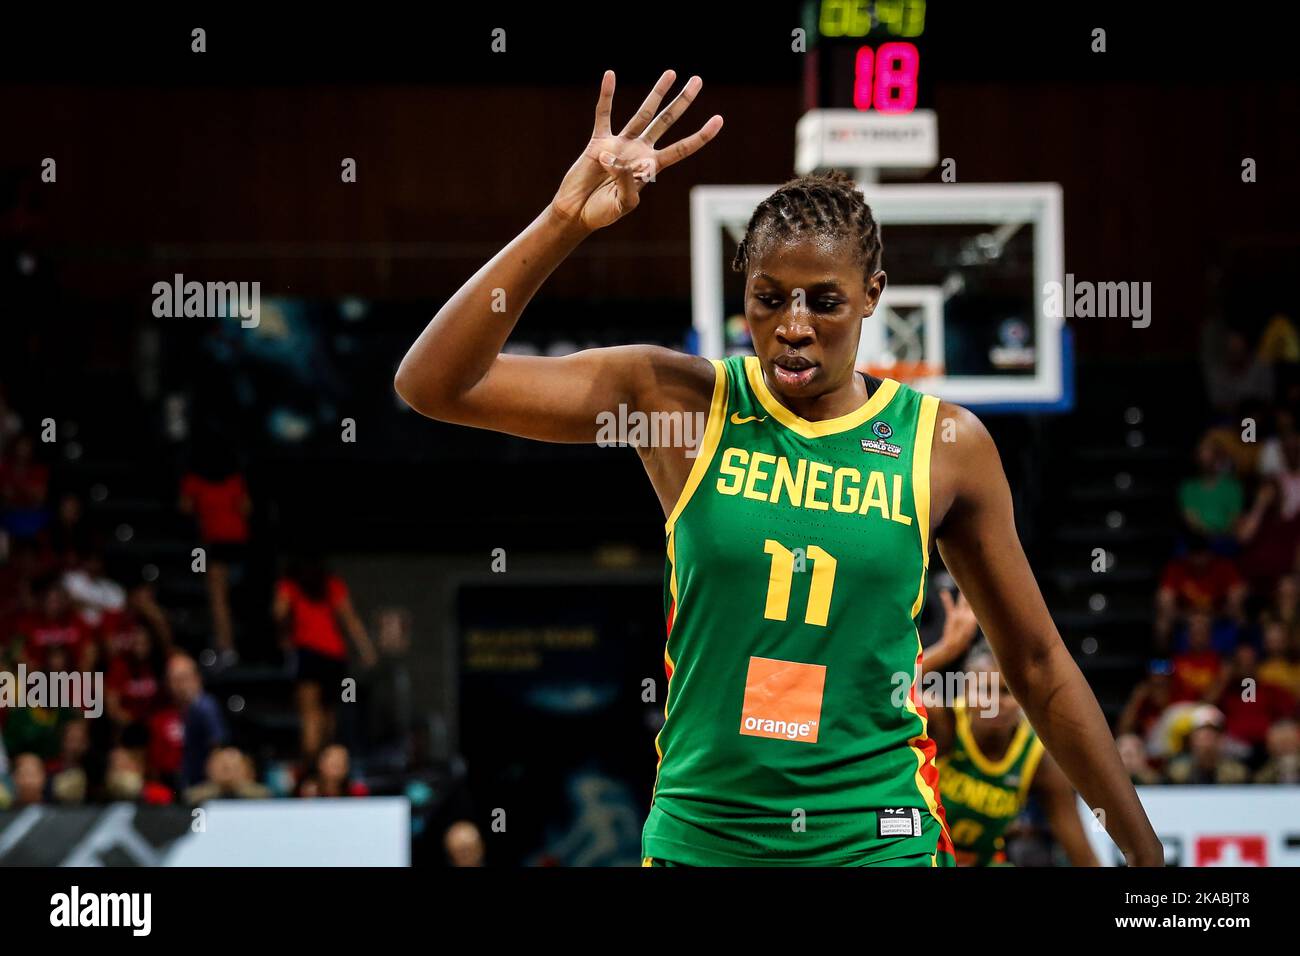 Spain, Tenerife, September 26, 2018: Senegalese female basketball player Maimouna Diarra during the FIBA Women's Basketball World Cup Stock Photo